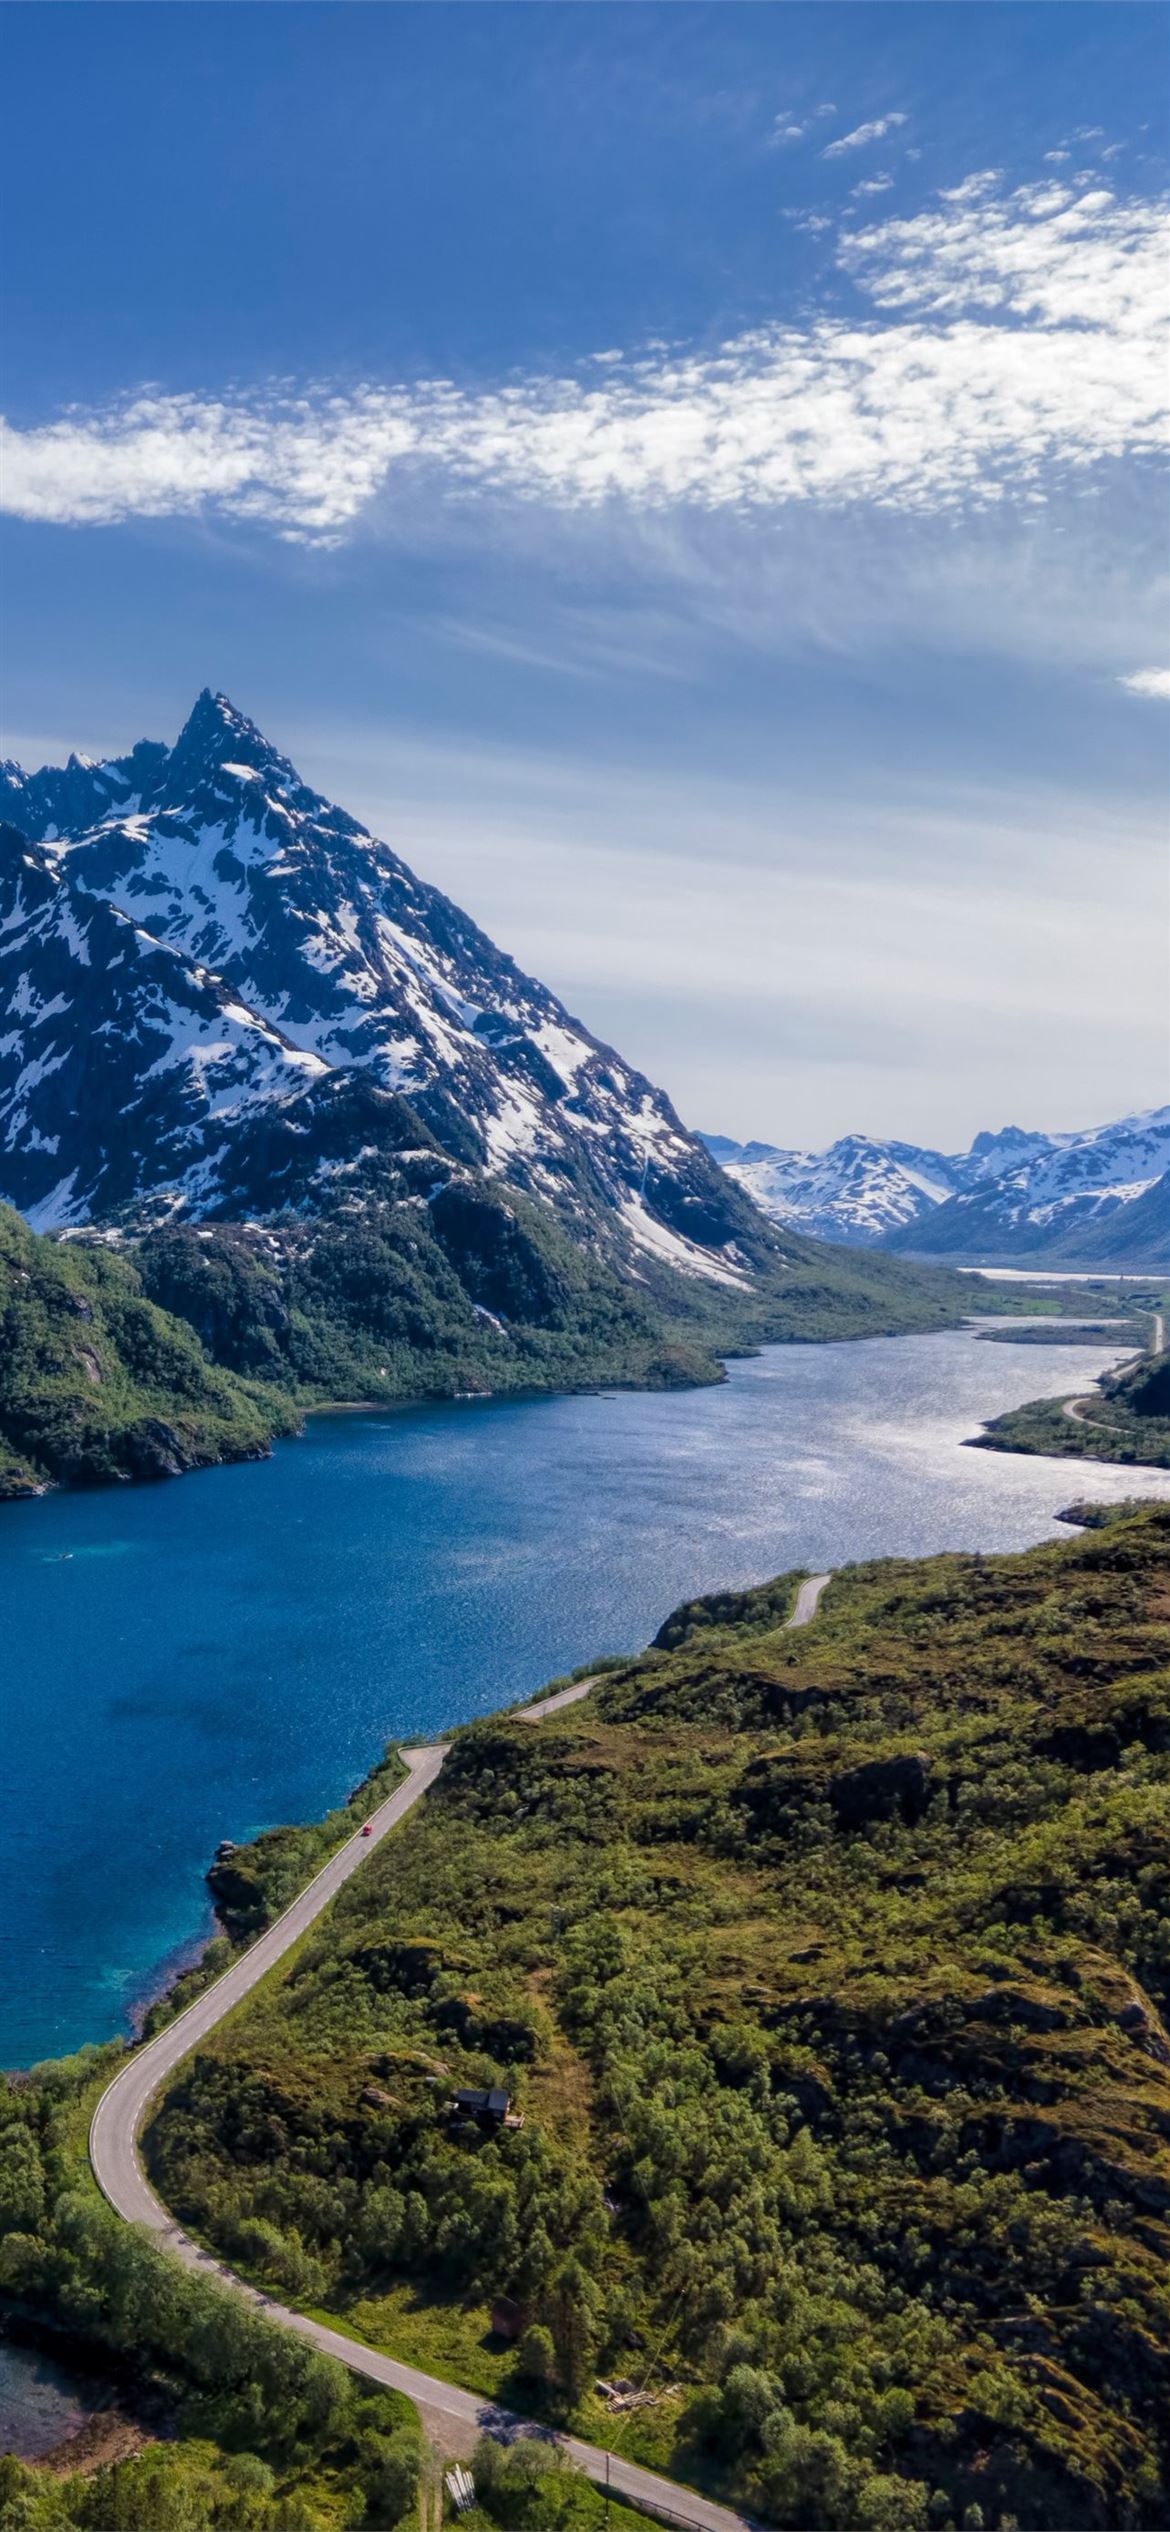 Mountains in Lofoten Norway 4k Ultra HD ID 6487 iPhone Wallpapers